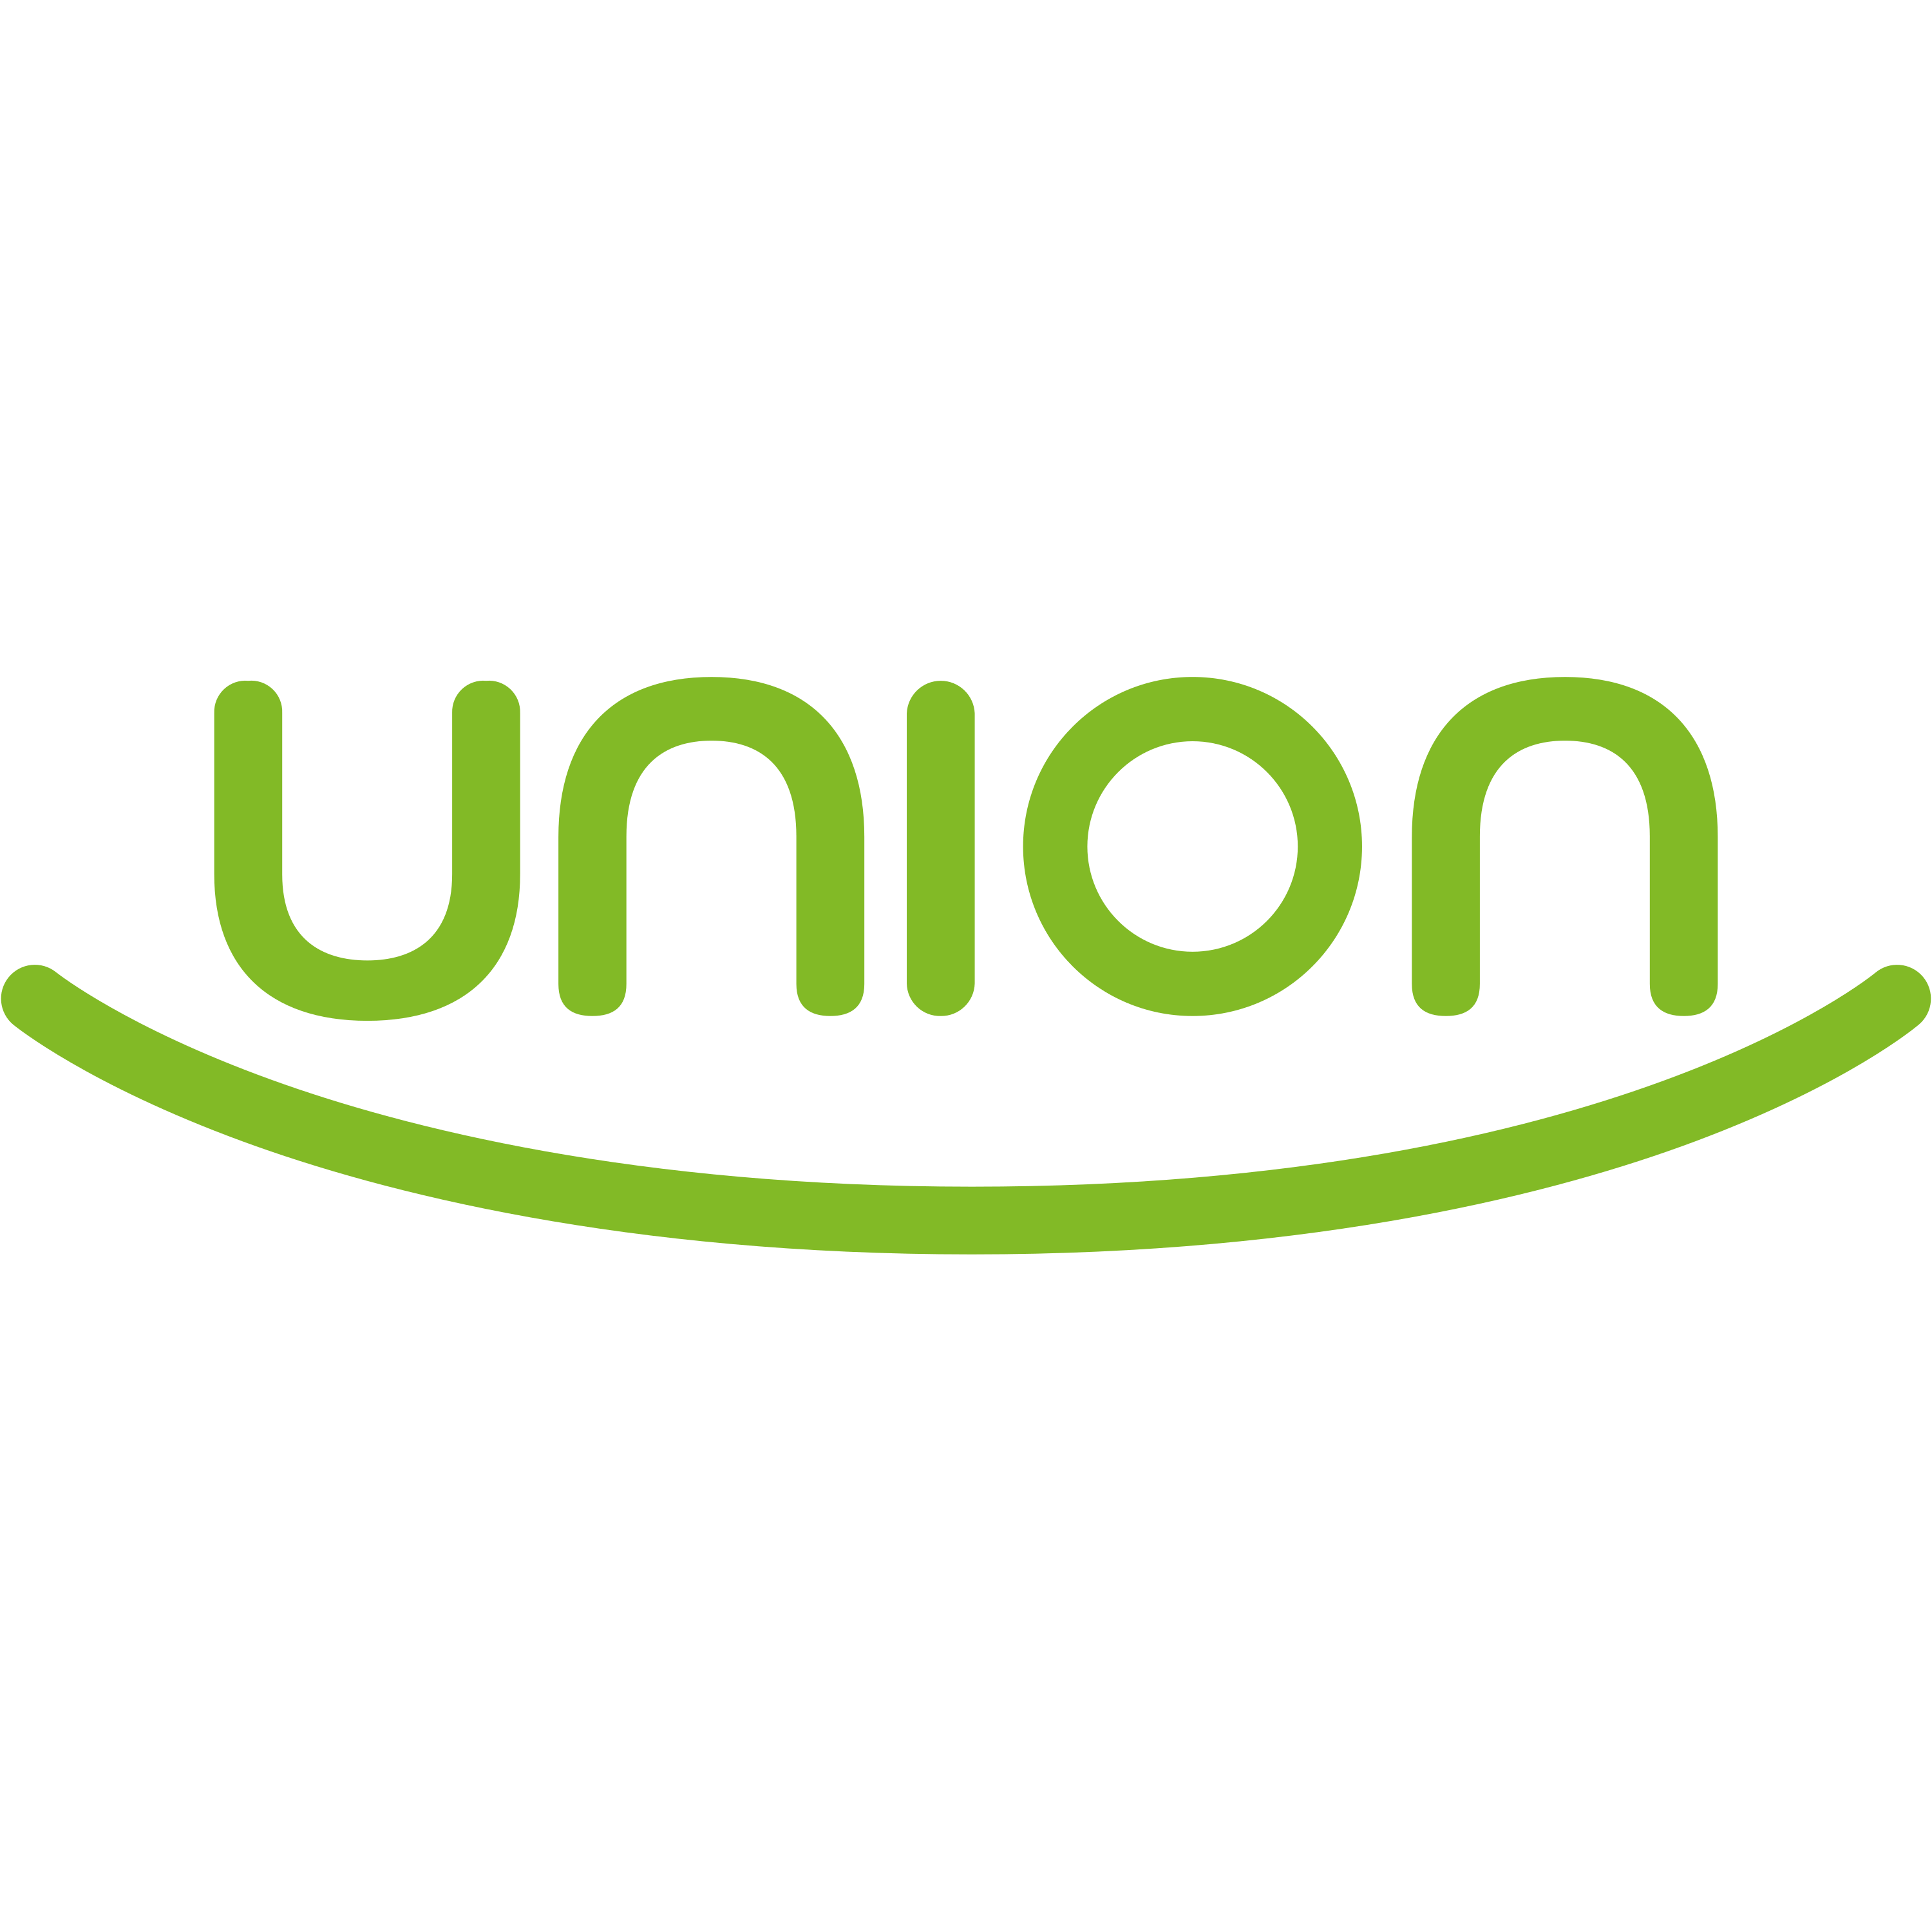 Union Logo Transparent Image